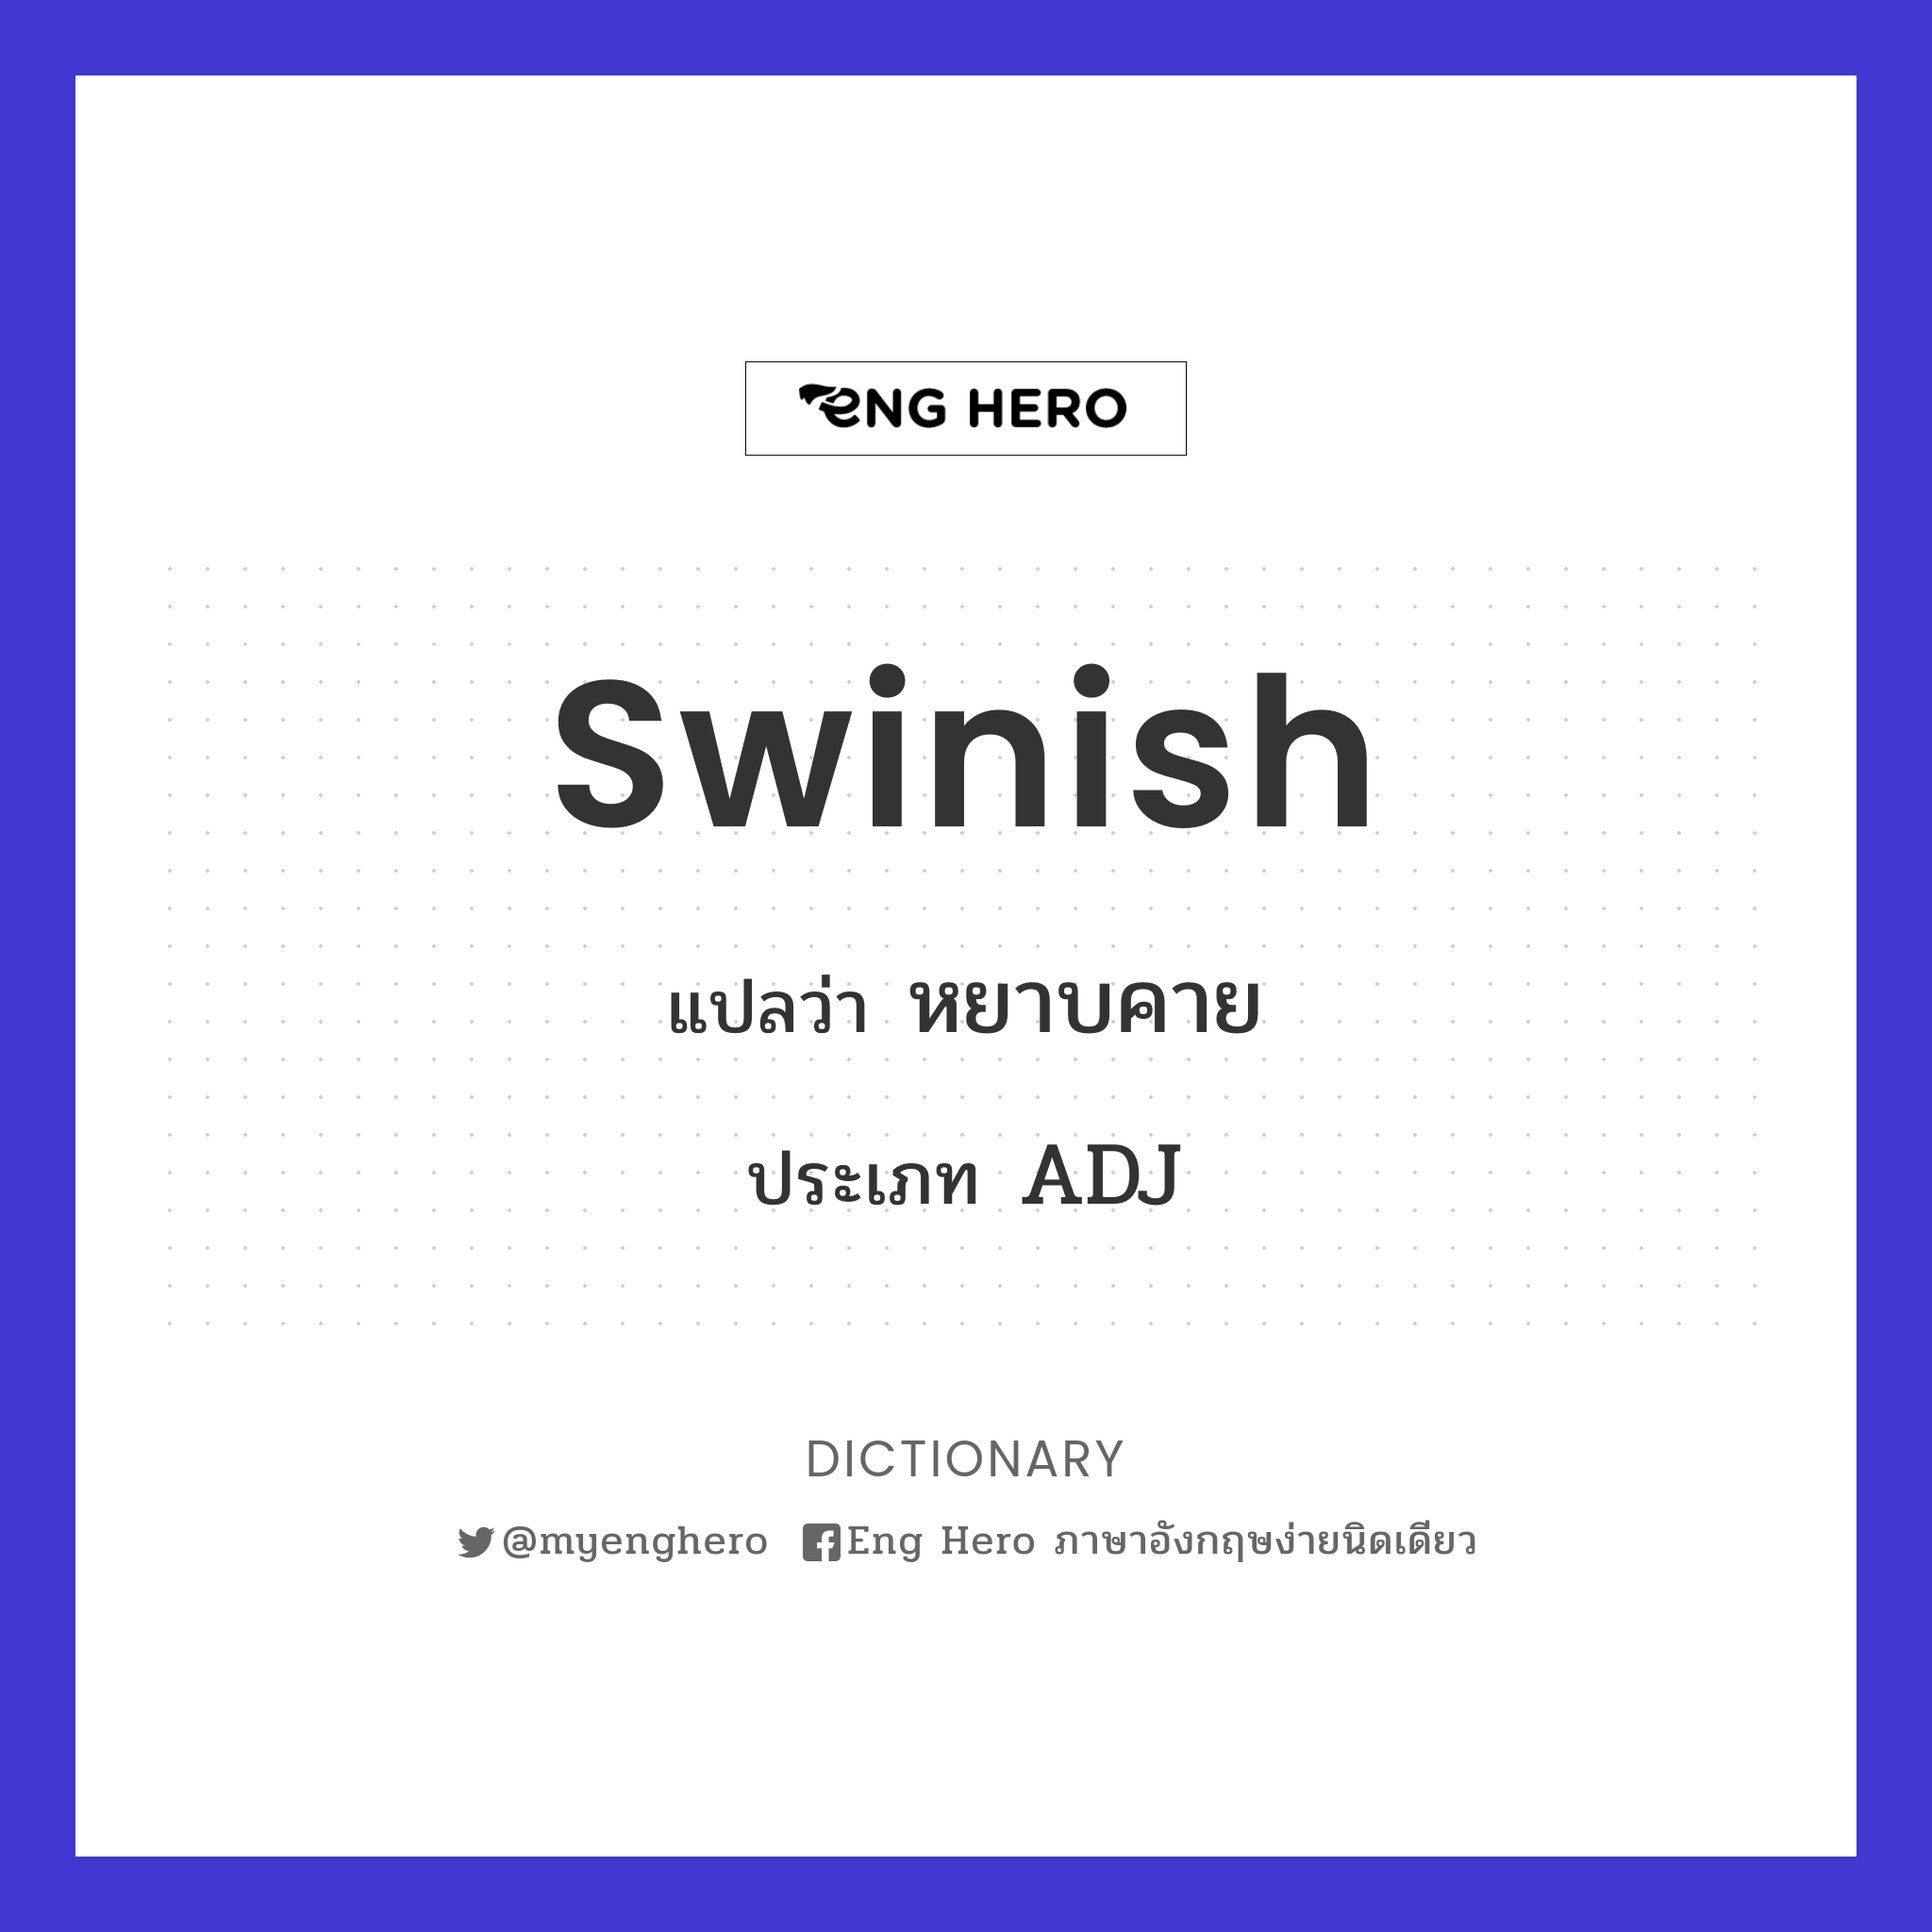 swinish